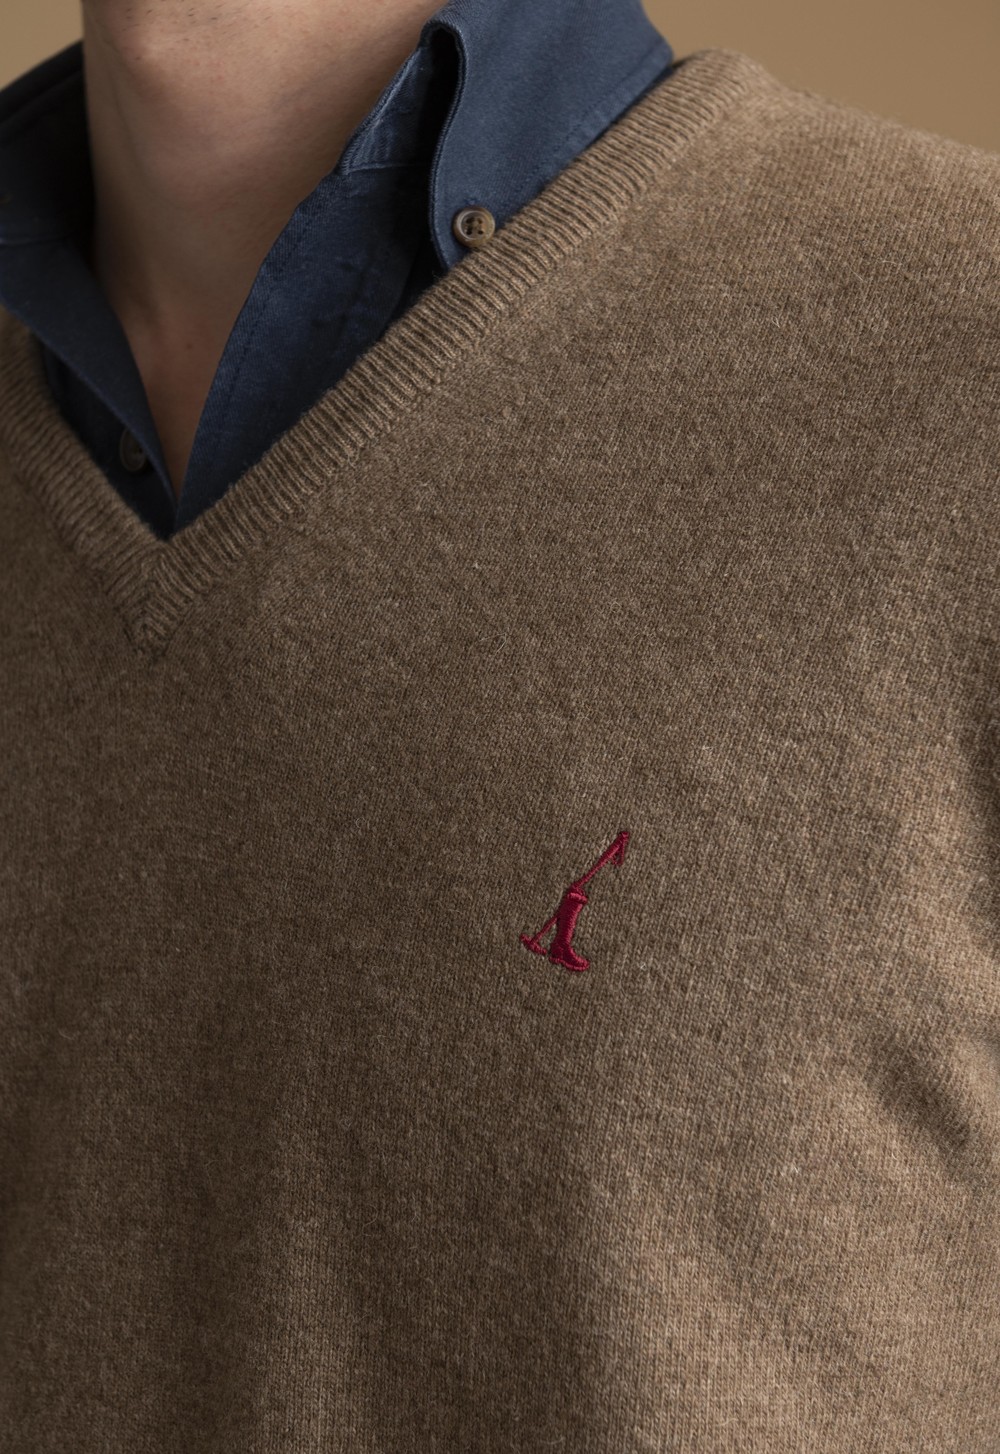 Sweater Lambswool V Hombre 27031 Beige